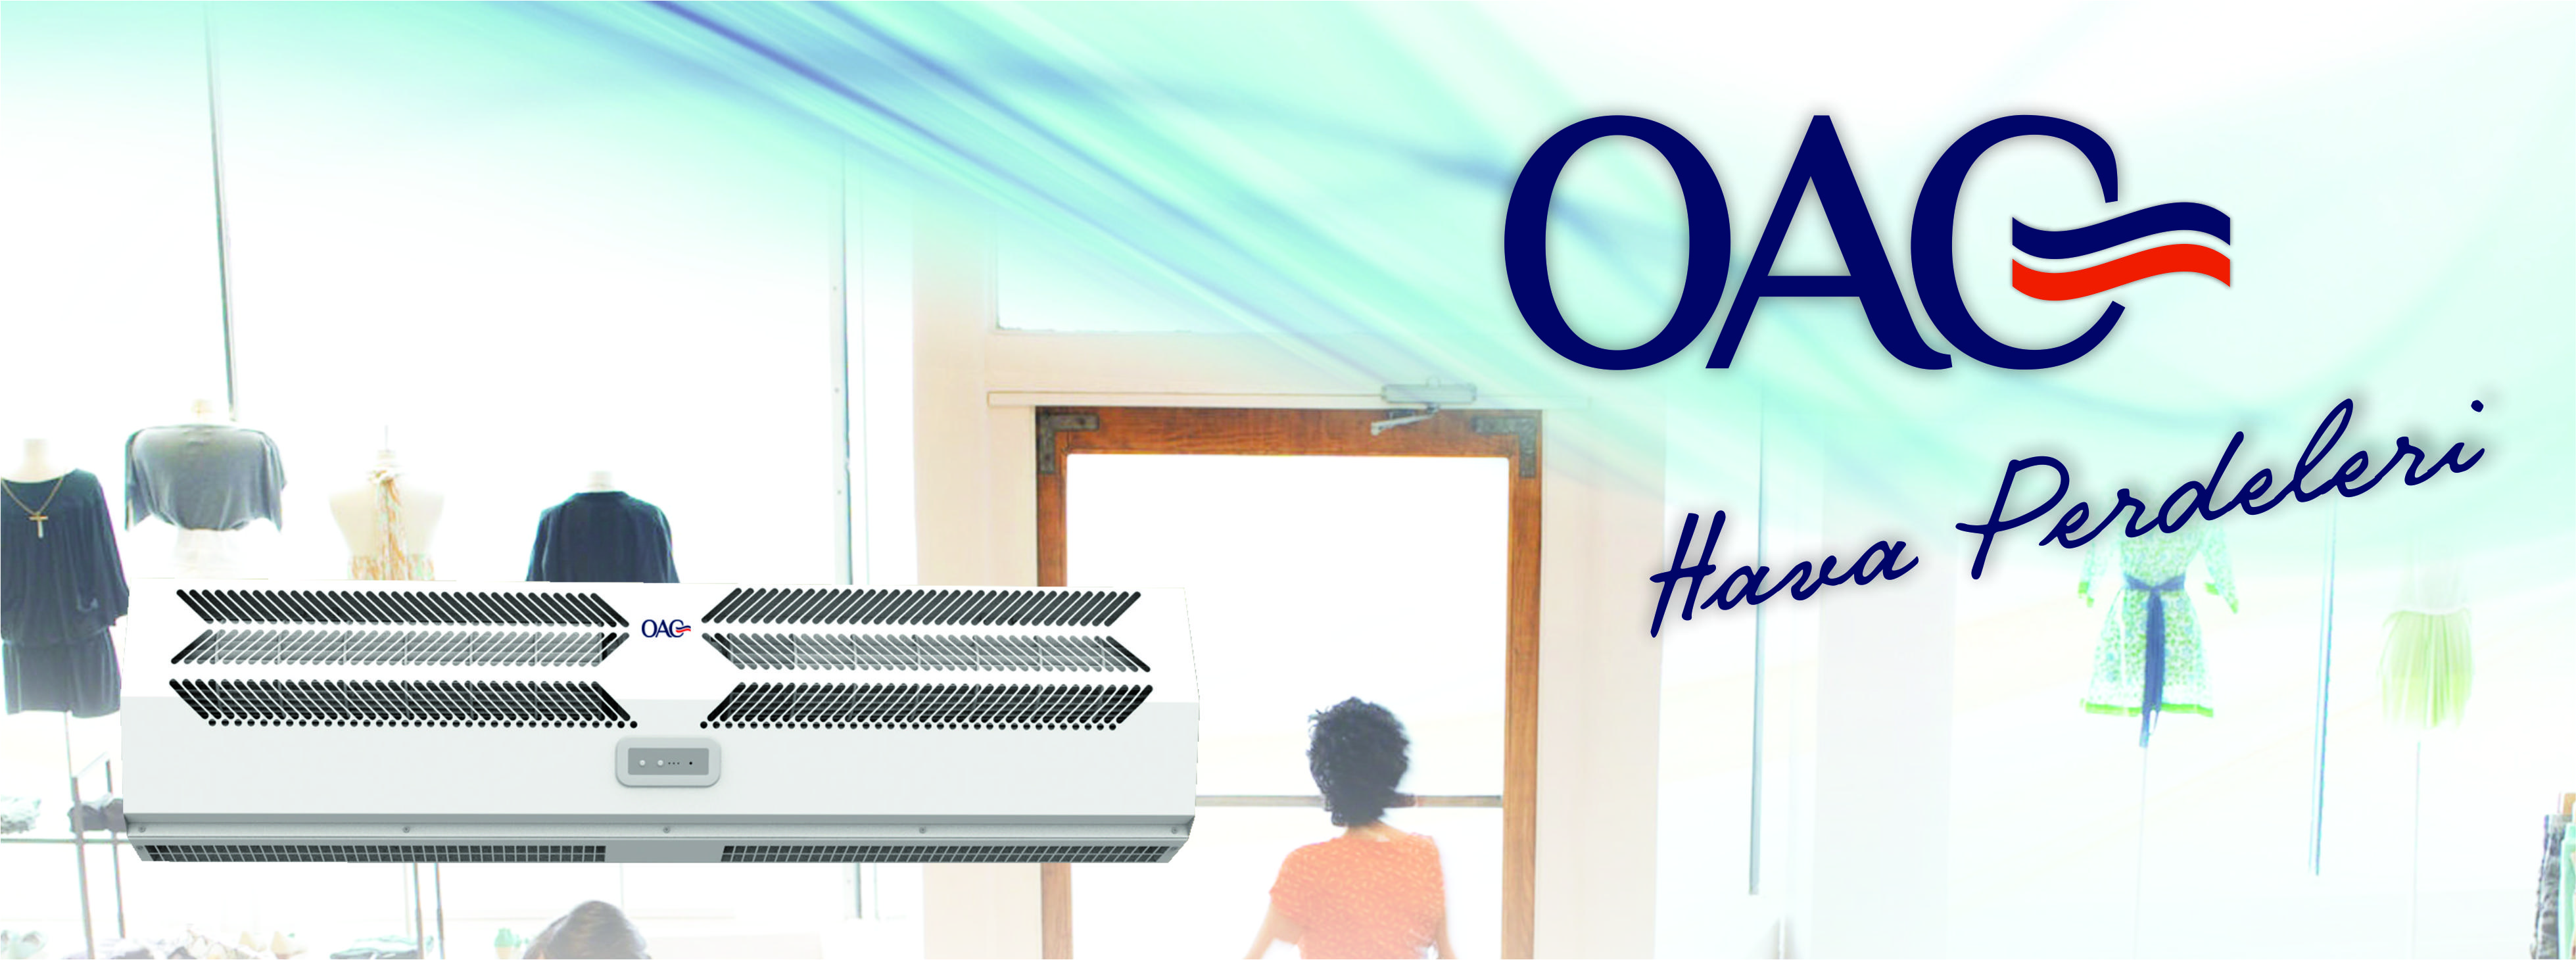 OAC Genel Tip Hava Perdeleri